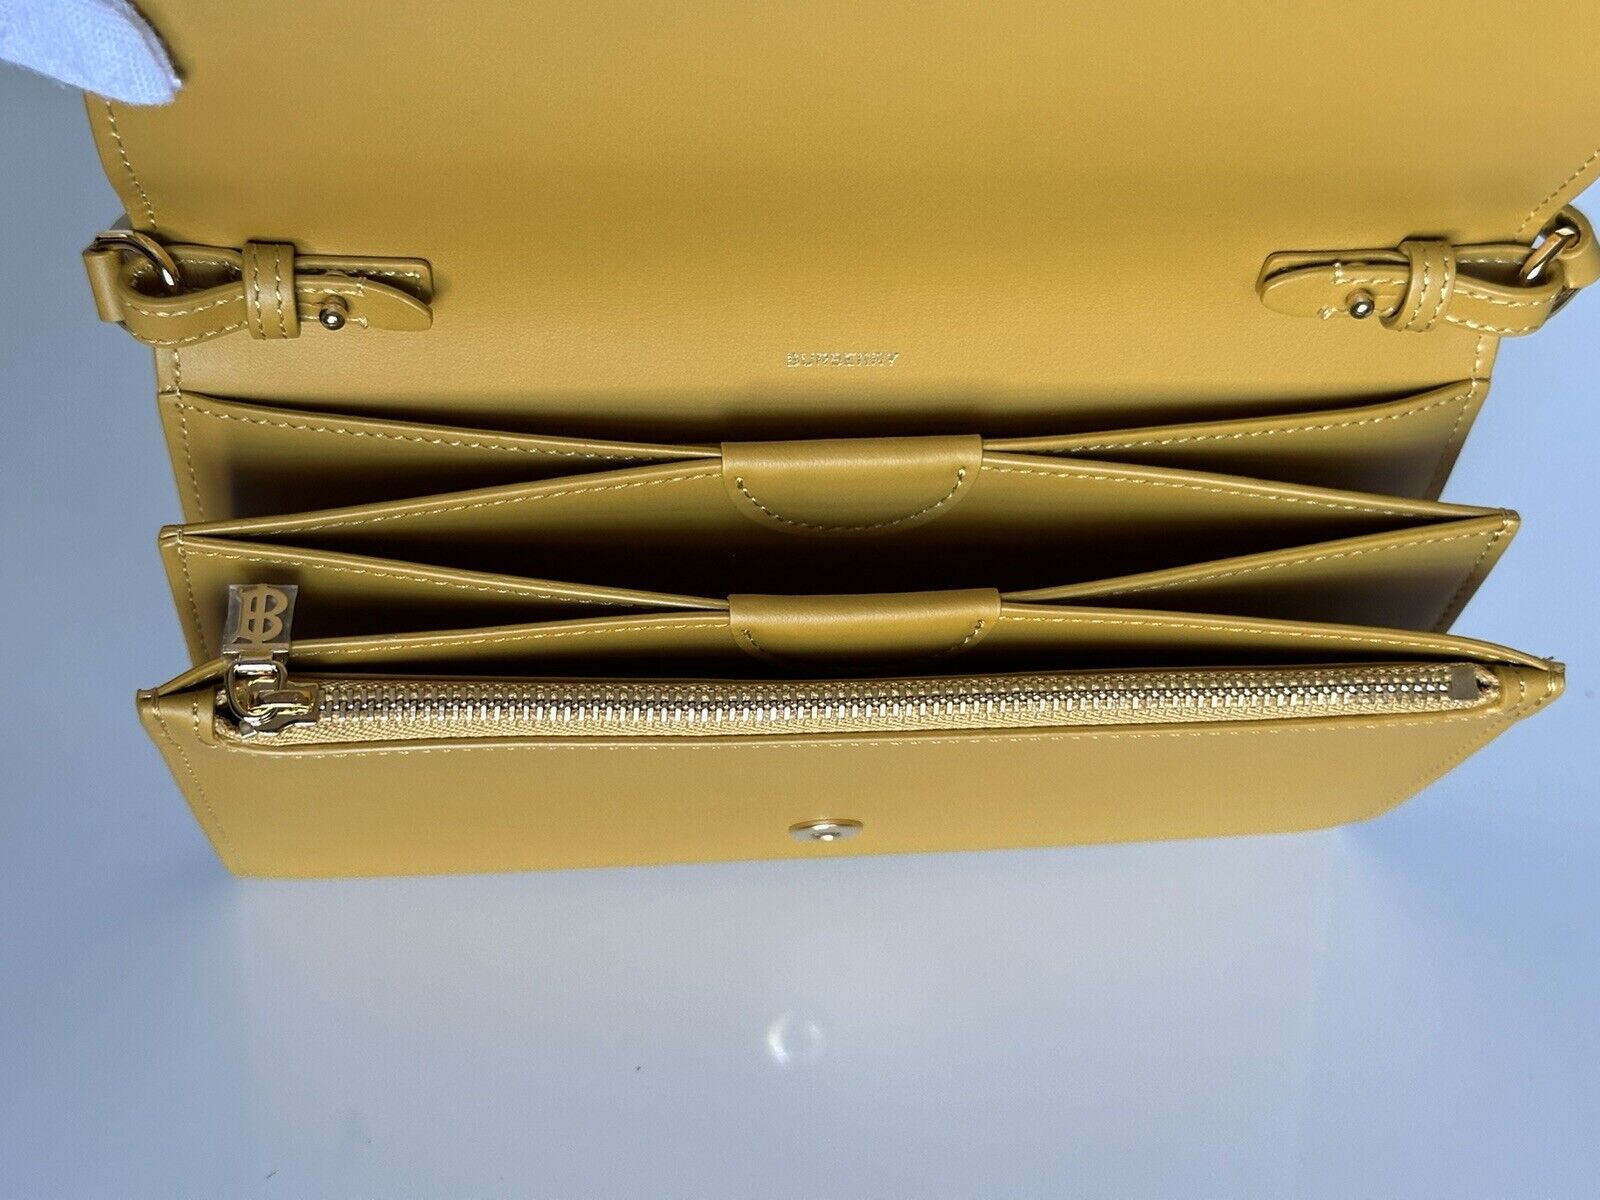 NWT $695 Burberry Hazelmere Leather Crossbody Bag Light Copper Orange 8046308 IT